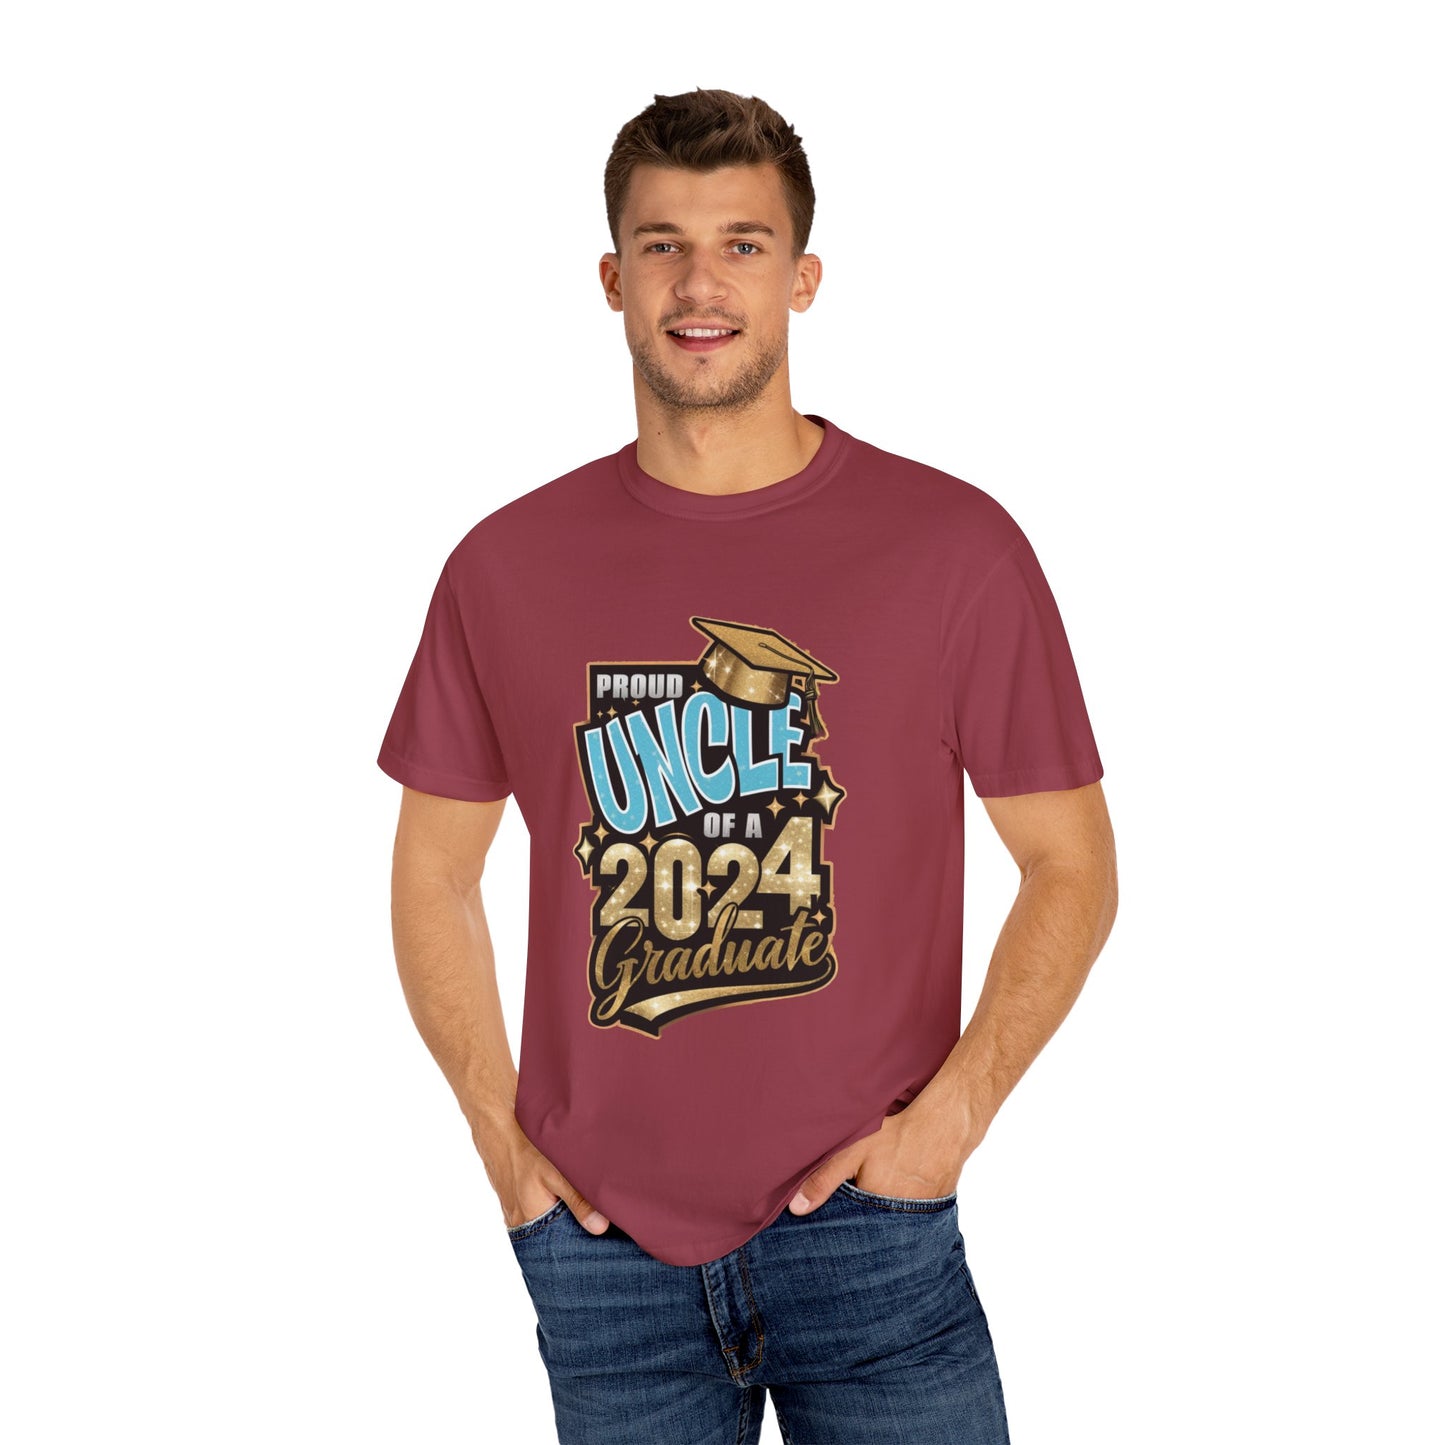 Proud Uncle of a 2024 Graduate Unisex Garment-dyed T-shirt Cotton Funny Humorous Graphic Soft Premium Unisex Men Women Chili T-shirt Birthday Gift-36